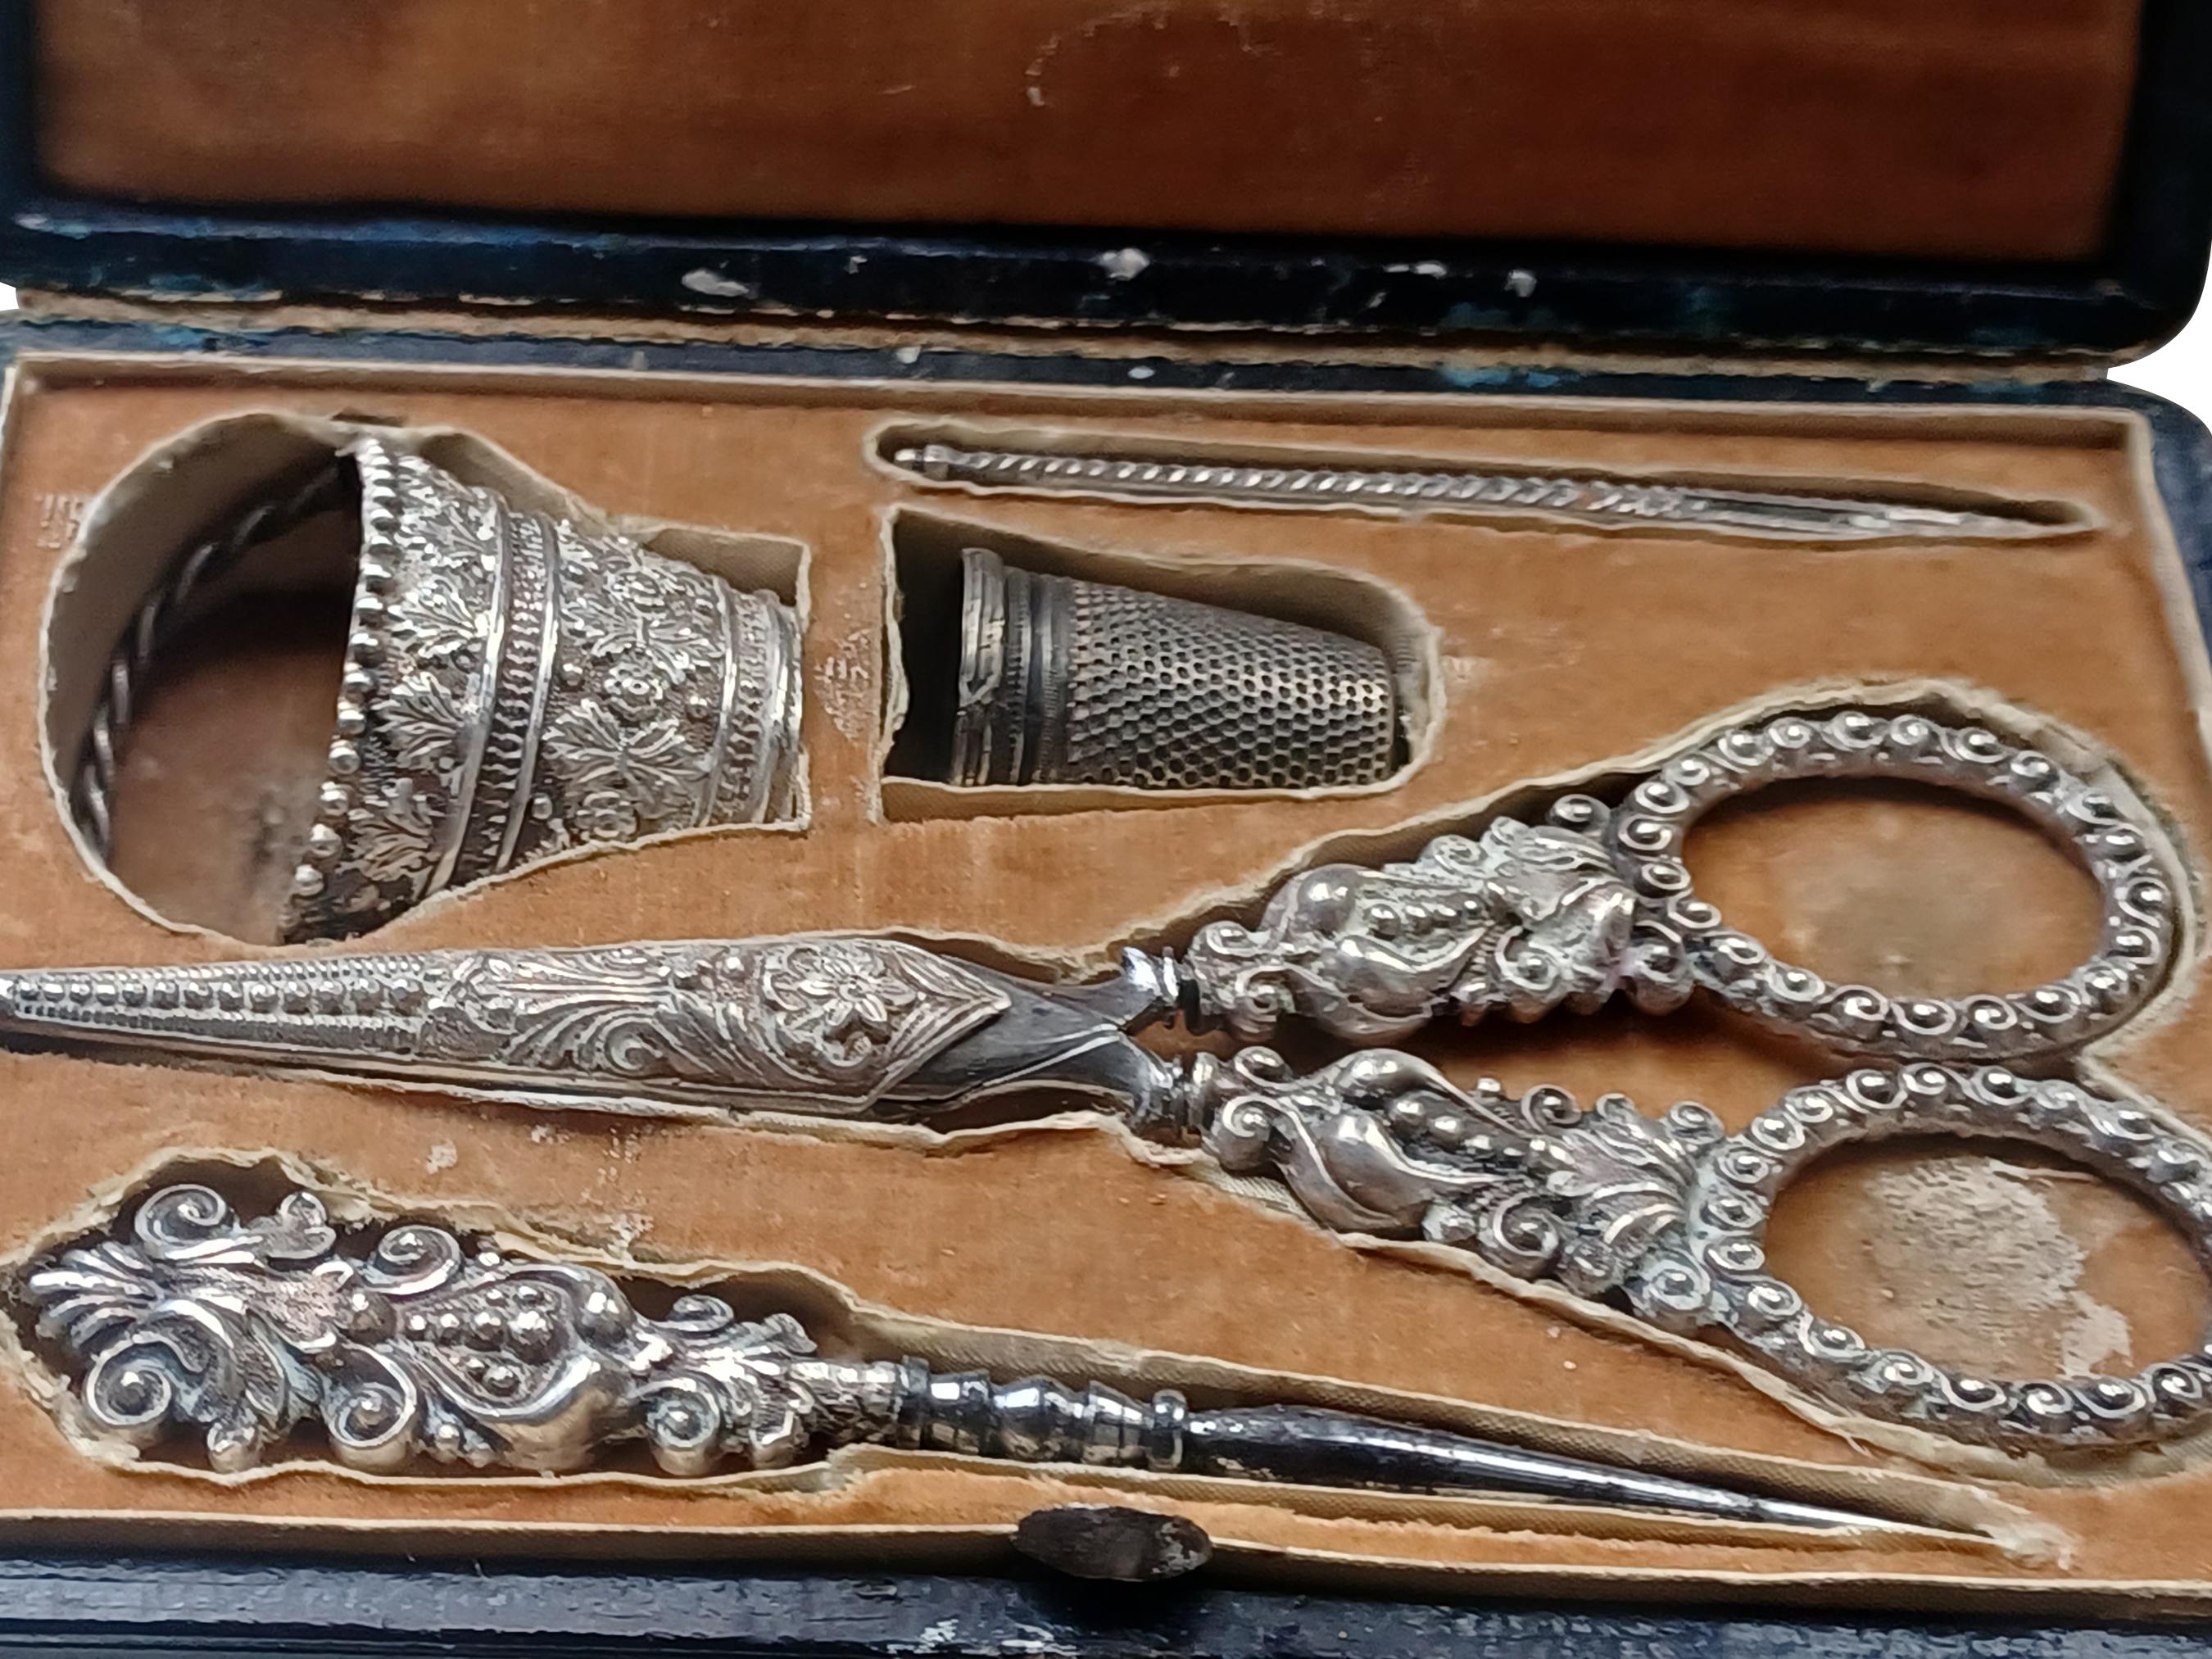 Rare Antique George IV Lady’s Sewing Necessaire with Original Case, est. 1825 For Sale 7